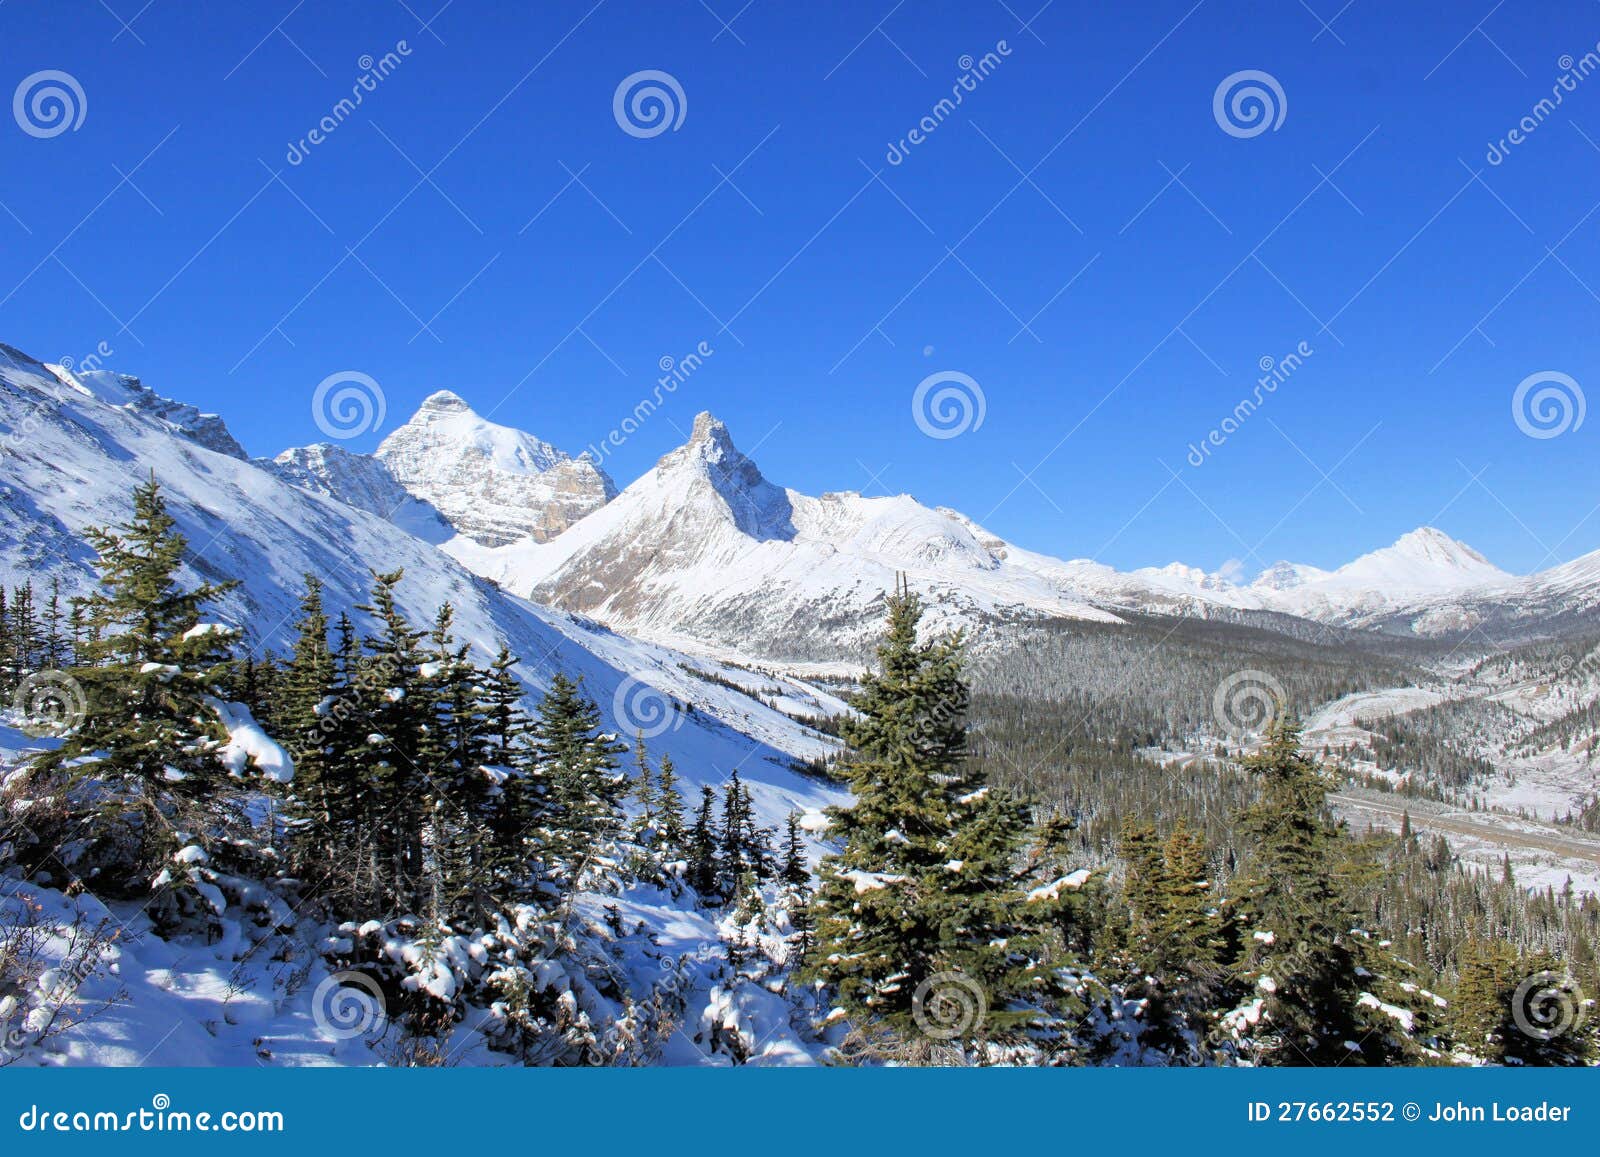 rocky mountains - canada